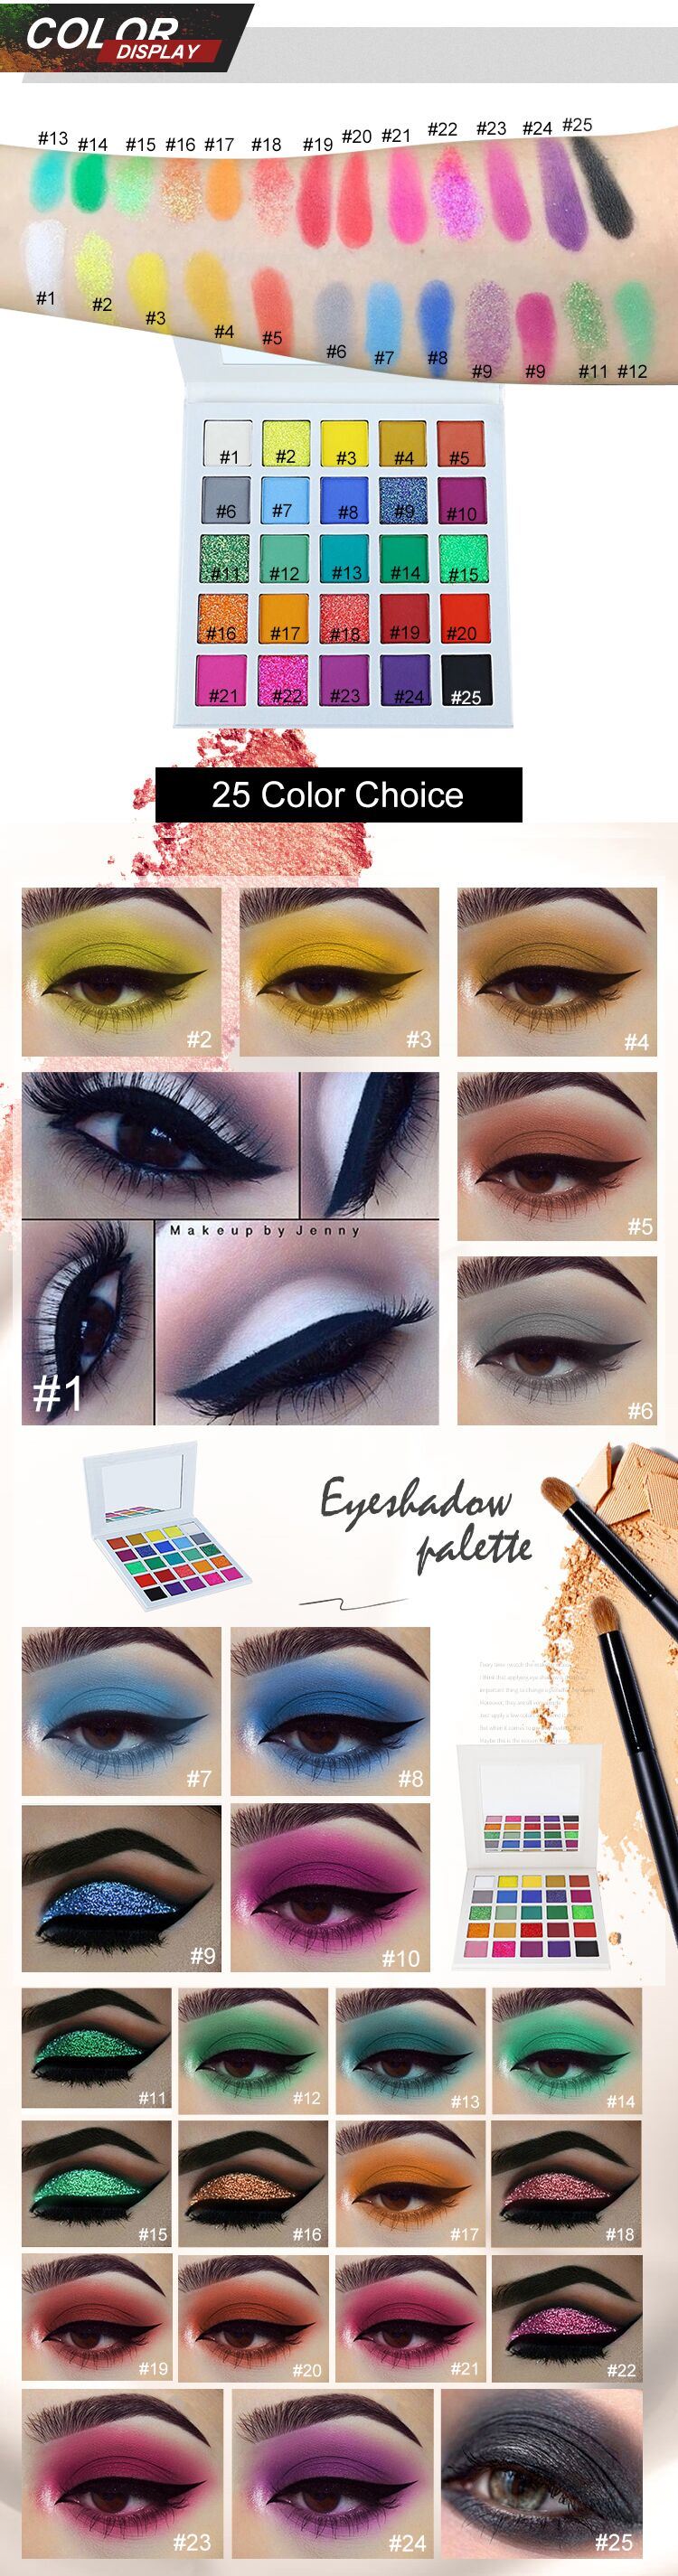 Make up Eye Shadow Palette Pastel Eyeshadow Palette High Quality Eye Shadow